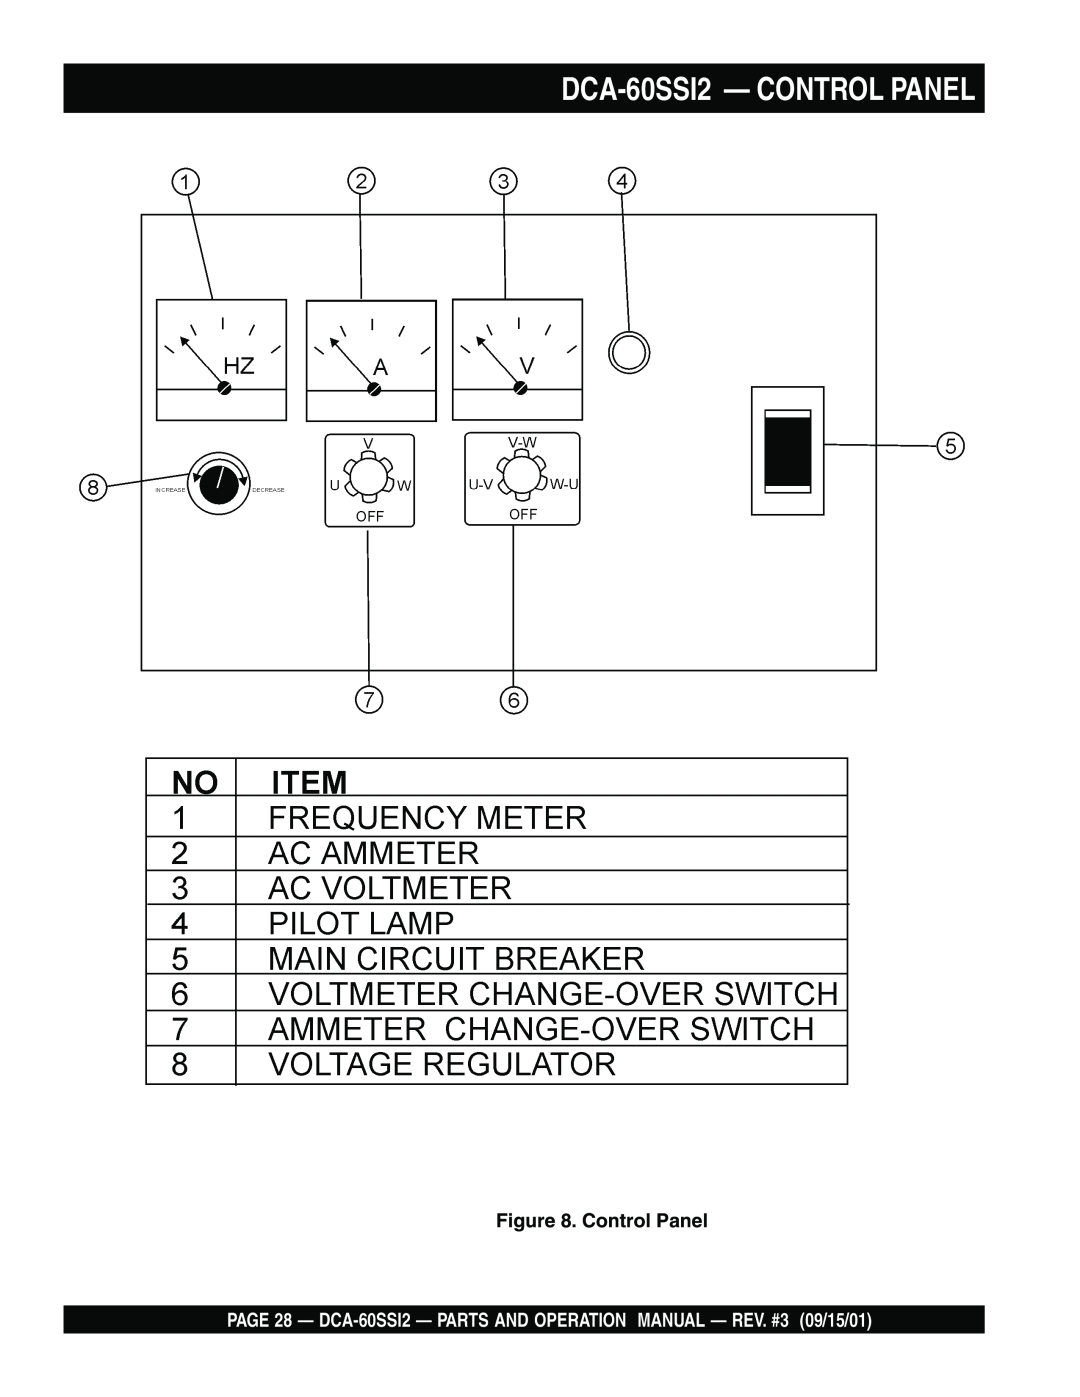 Multiquip DCA-60SS12 operation manual DCA-60SSI2— CONTROL PANEL, Control Panel 